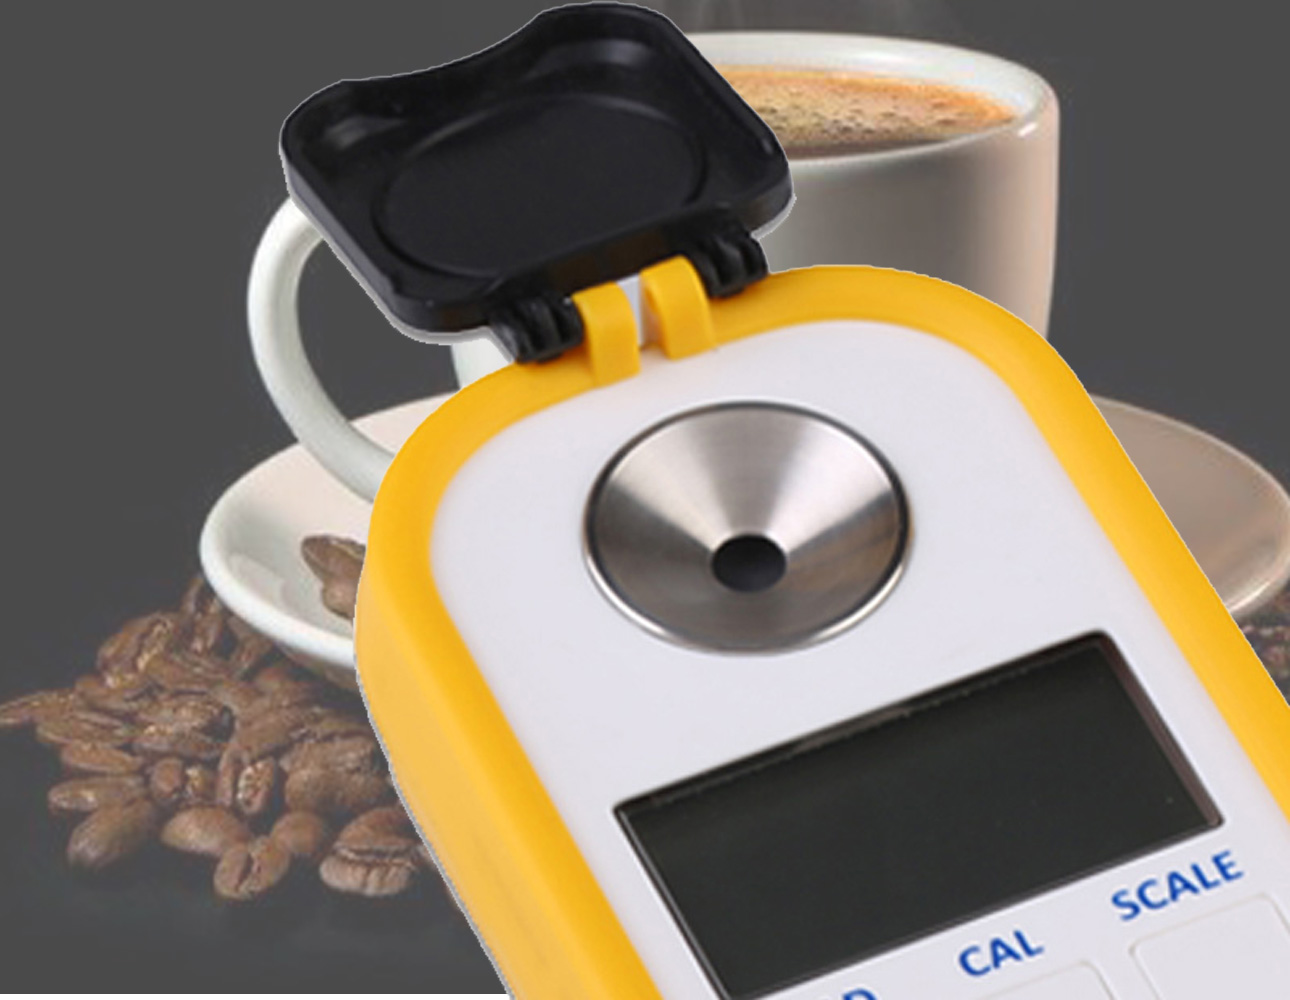 Digital coffee concentration meter Coffee Brix meter Brix/TDS